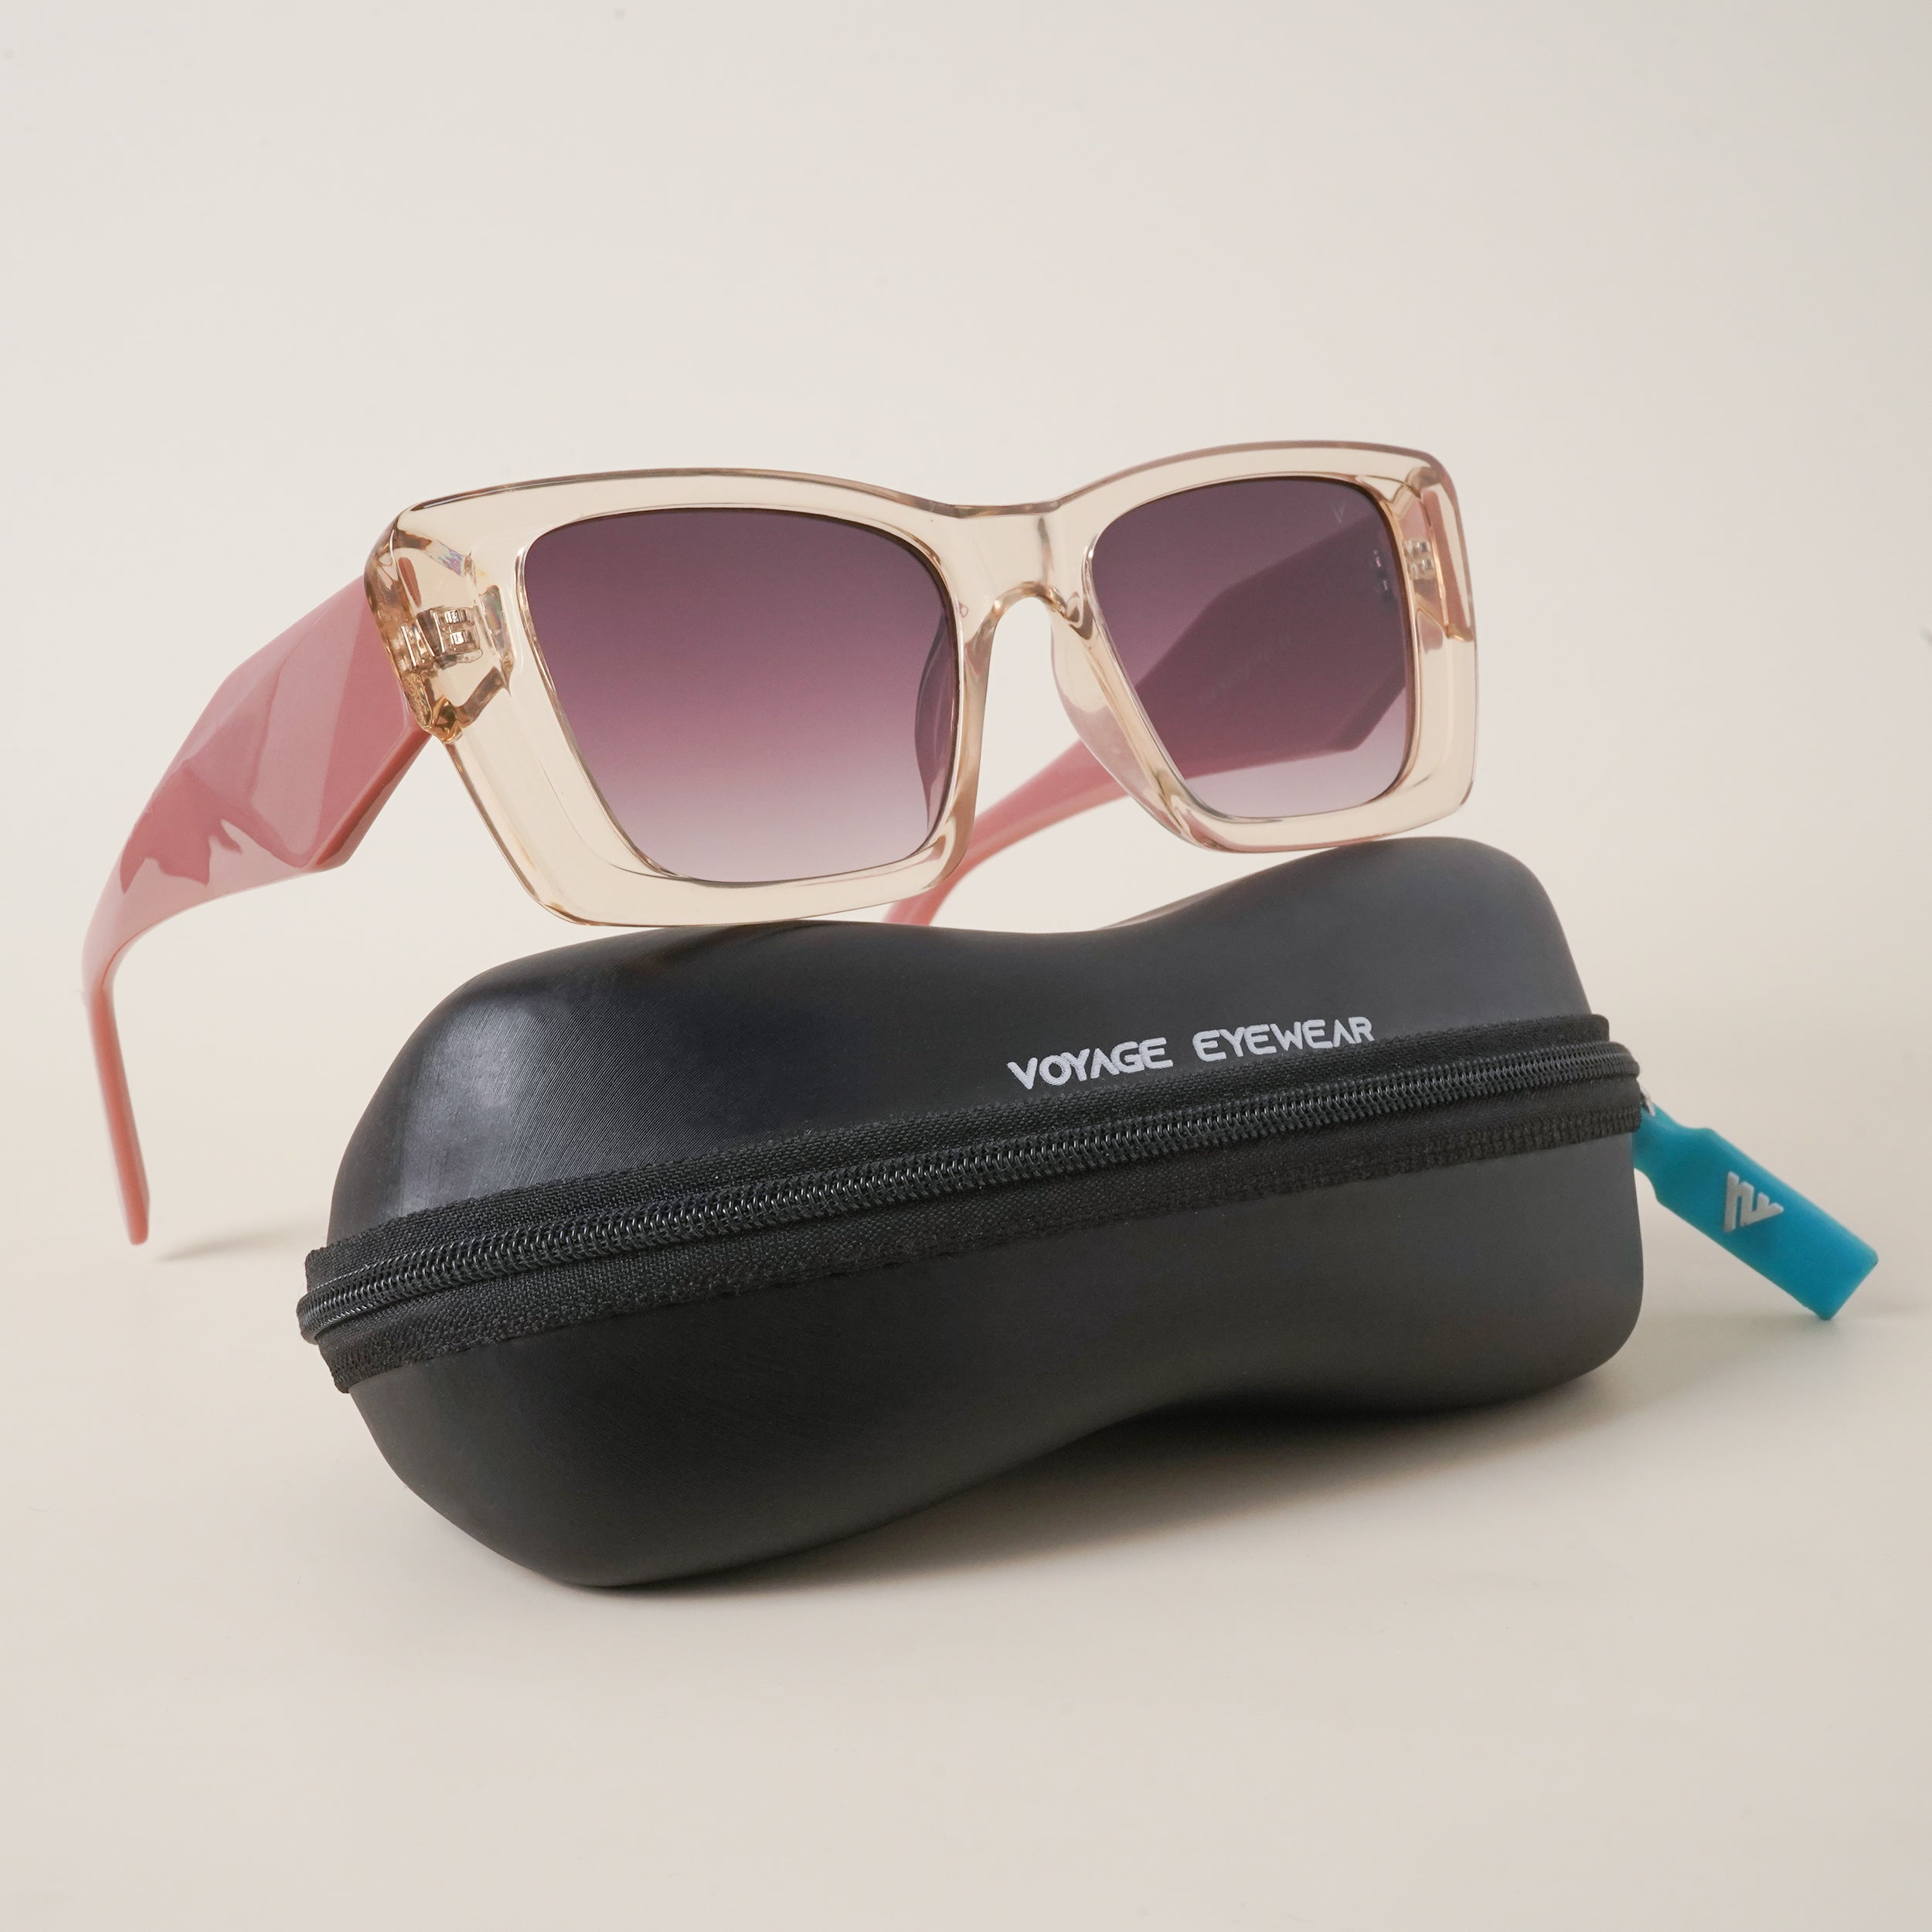 Voyage Nude/Light Brown Cateye Sunglasses MG3685